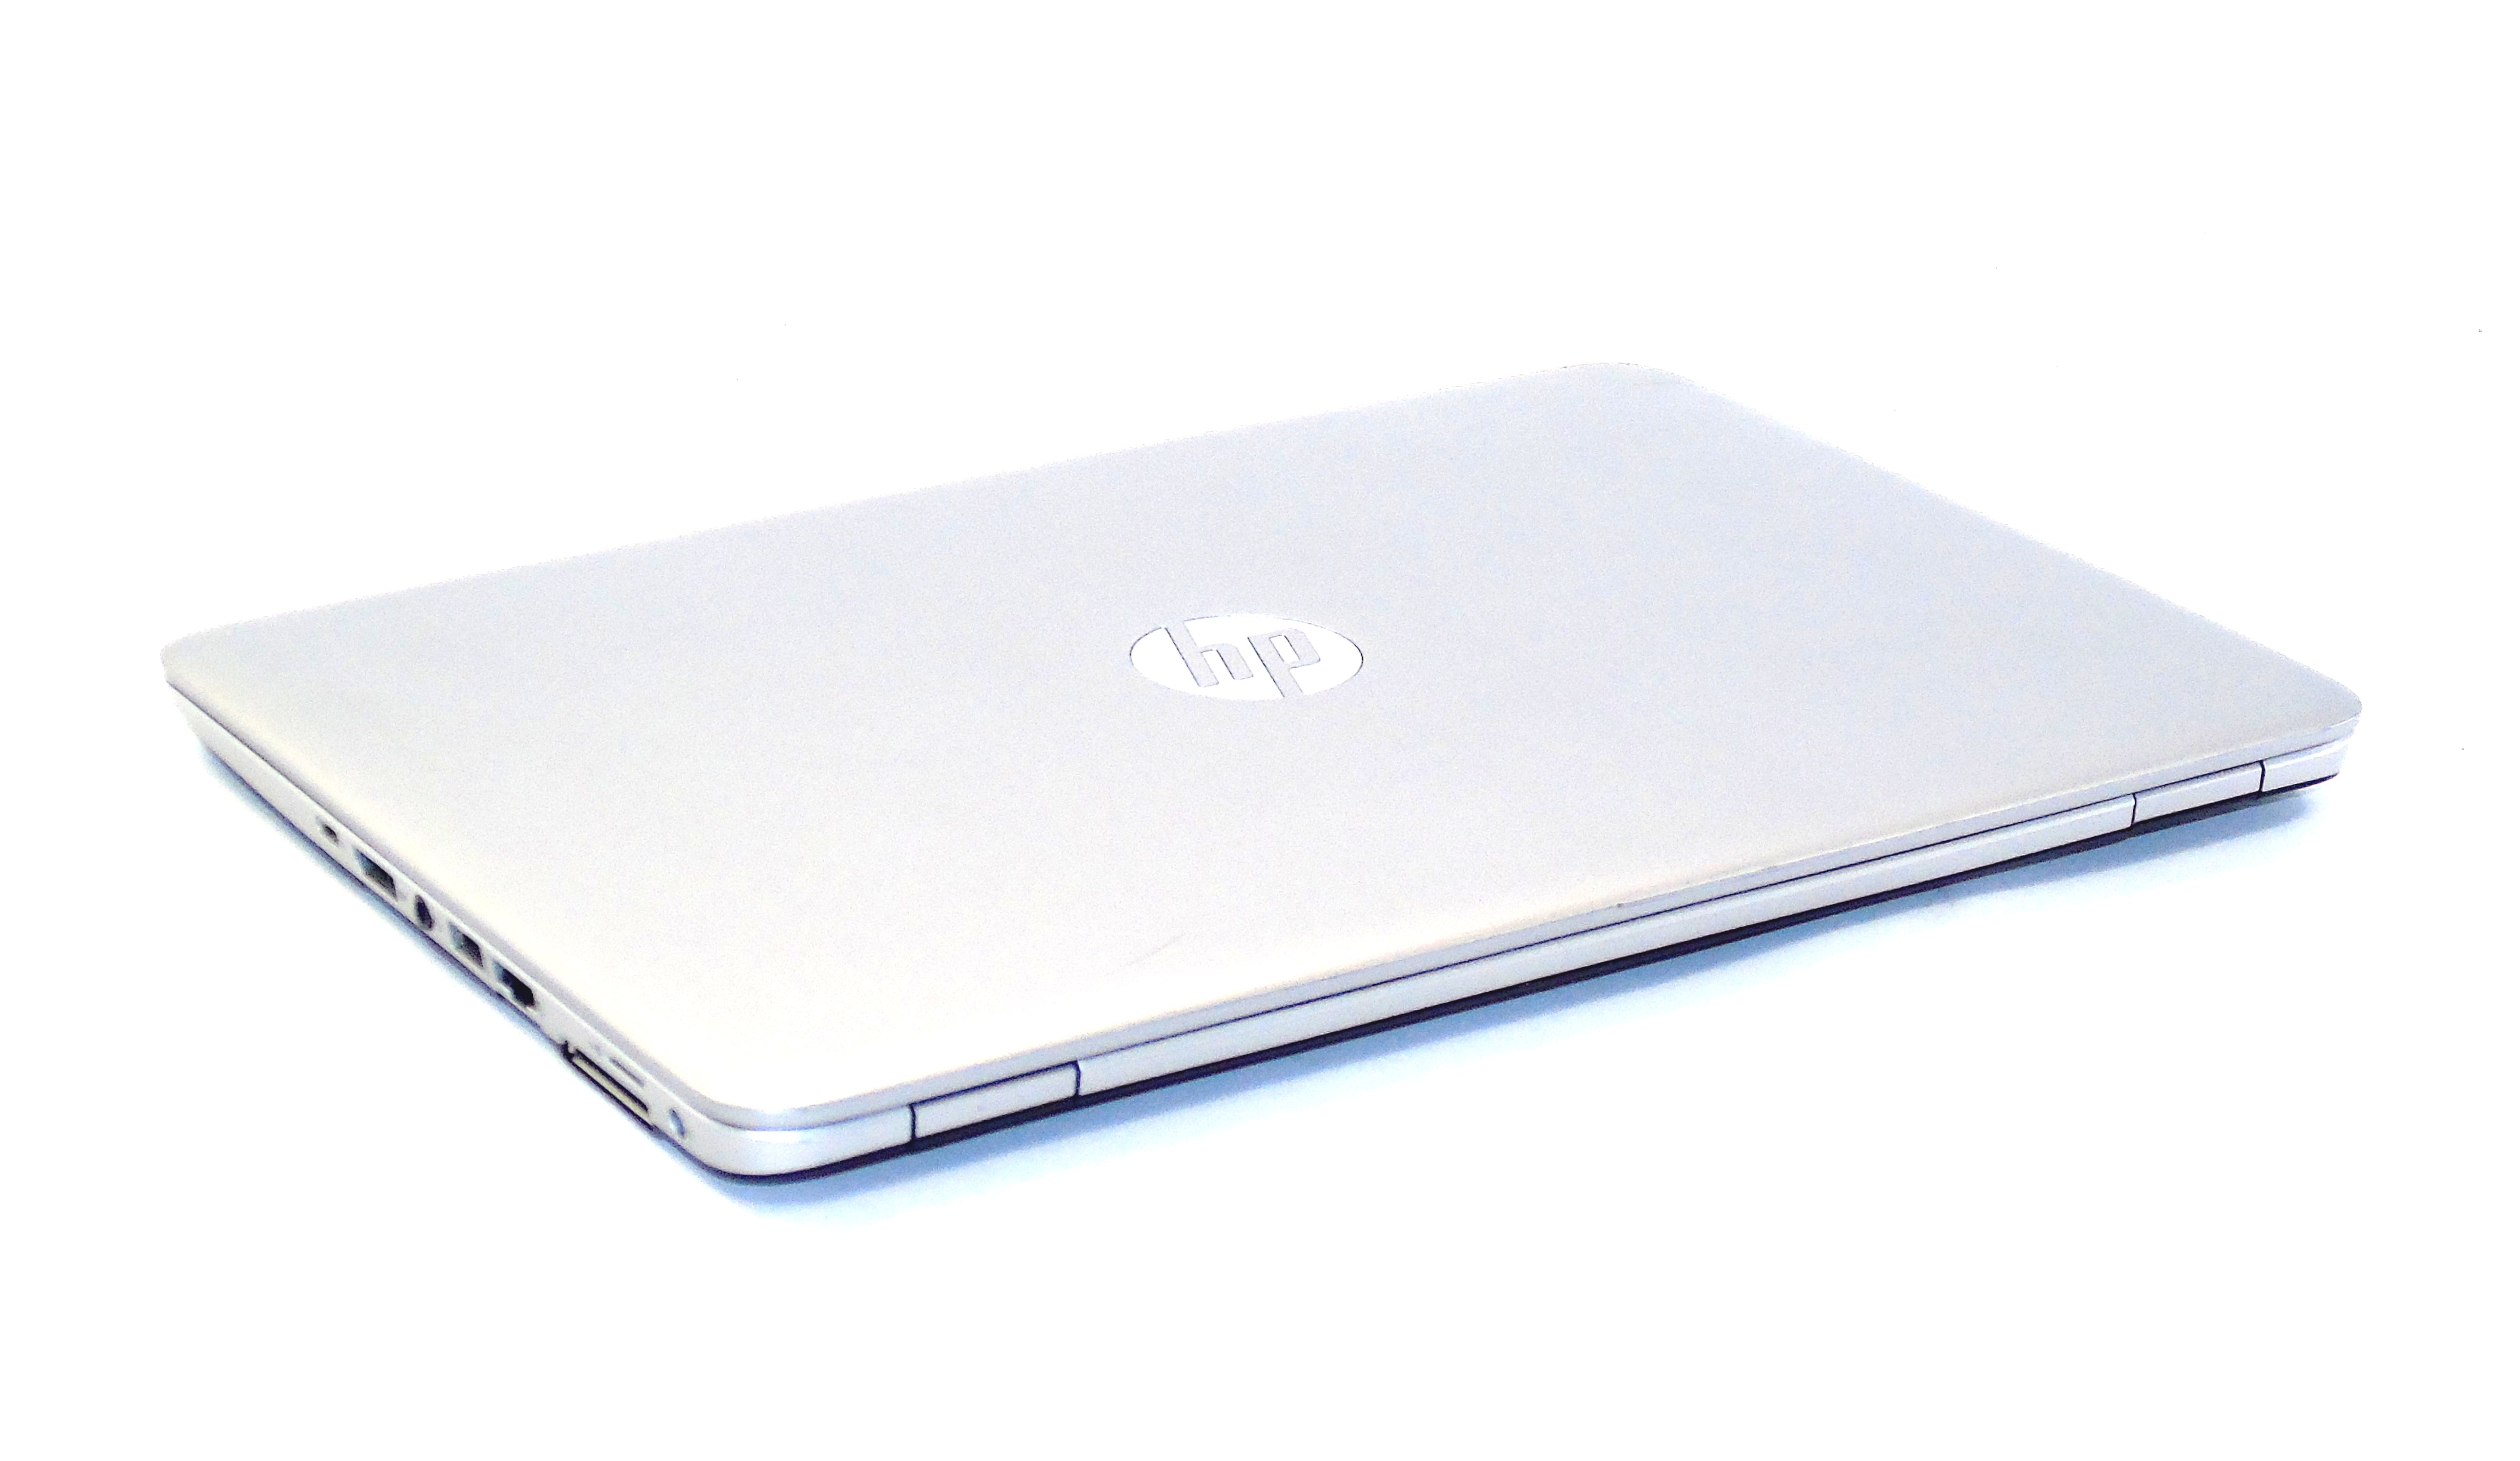 HP EliteBook 840 G4 Laptop, 14" i7 7th Gen, 8GB RAM, 256GB SSD